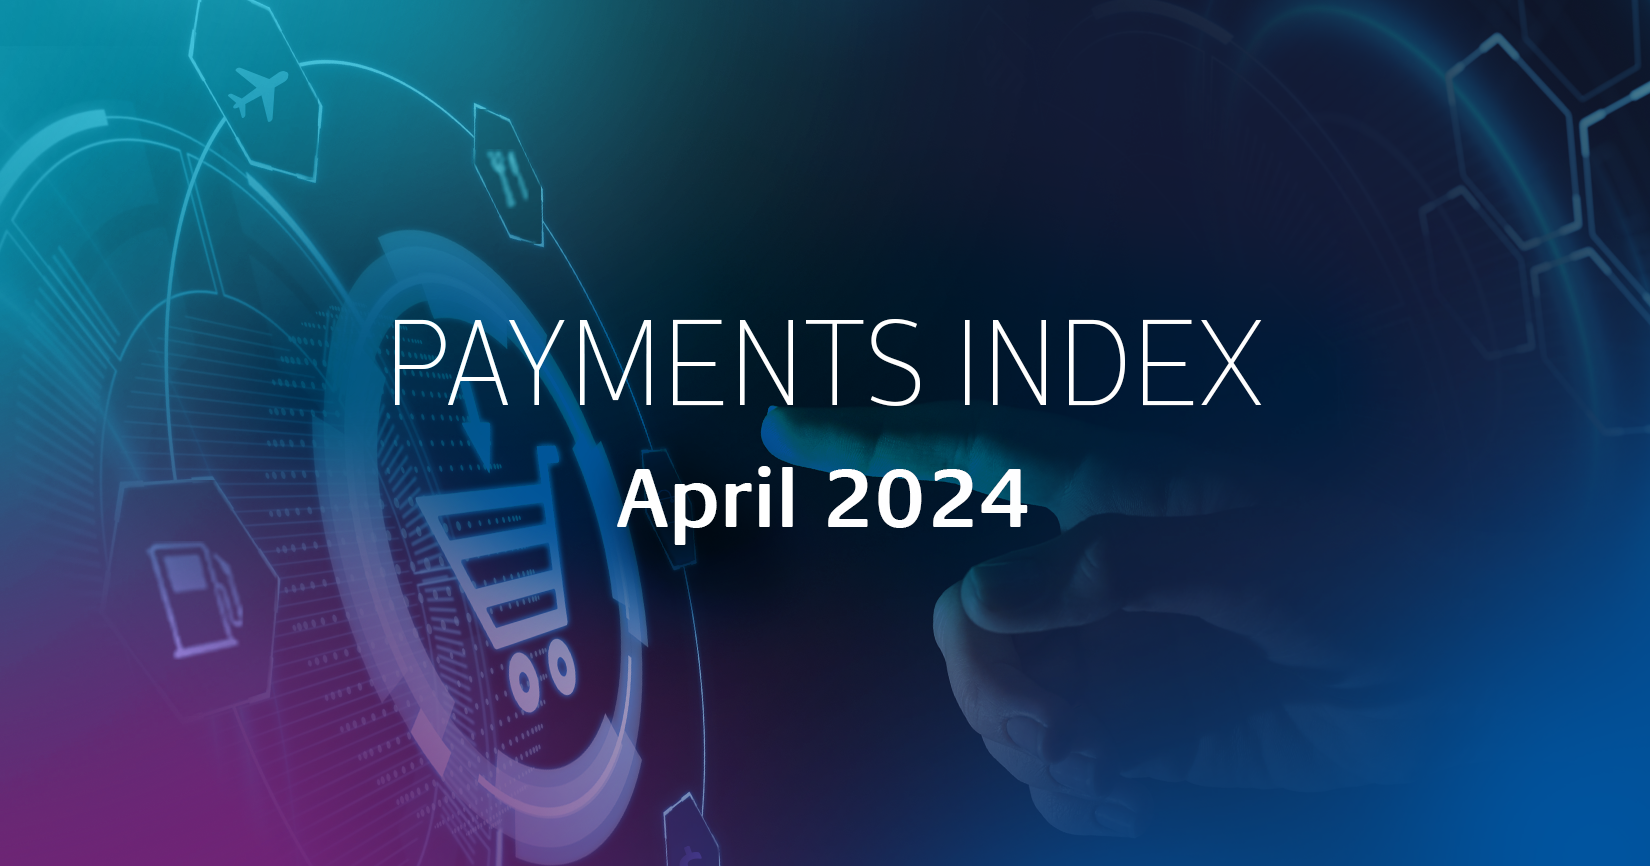 "Payments Index April 2024: A Deep Dive into Digital Payments post thumbnail"